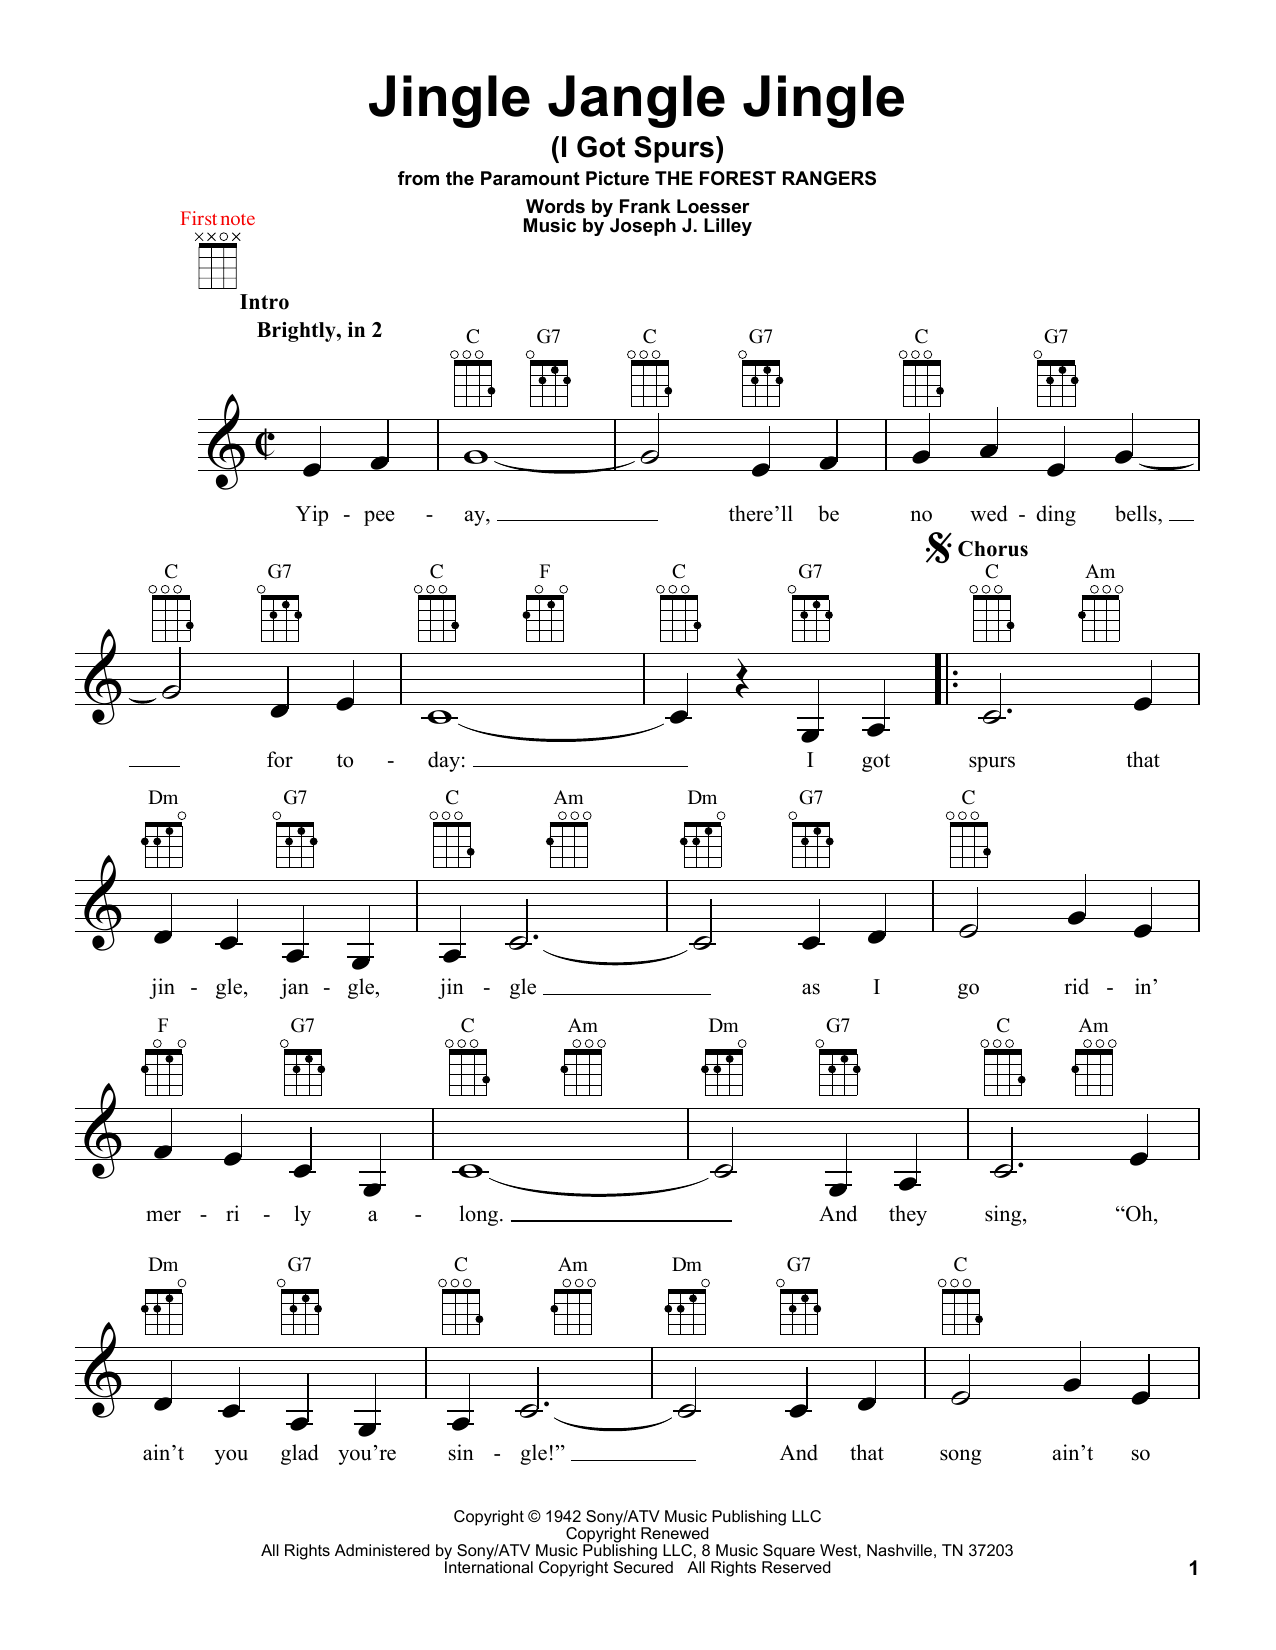 Frank Loesser Jingle Jangle Jingle (I Got Spurs) sheet music notes and chords arranged for Lead Sheet / Fake Book